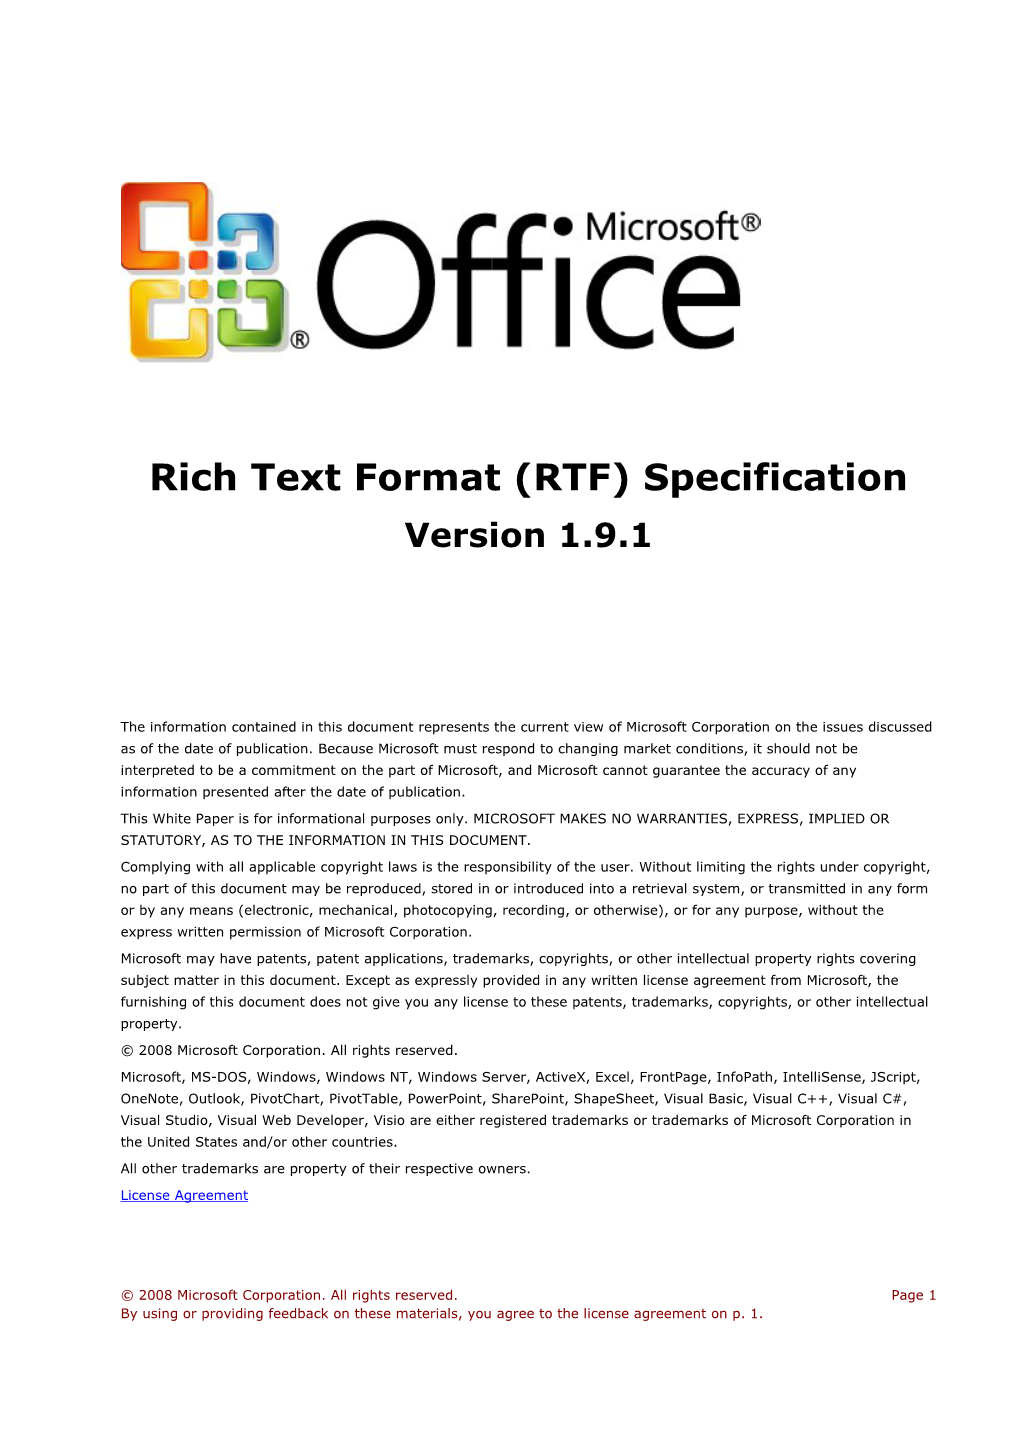 Rich Text Format (RTF) Specification Version 1.9.1